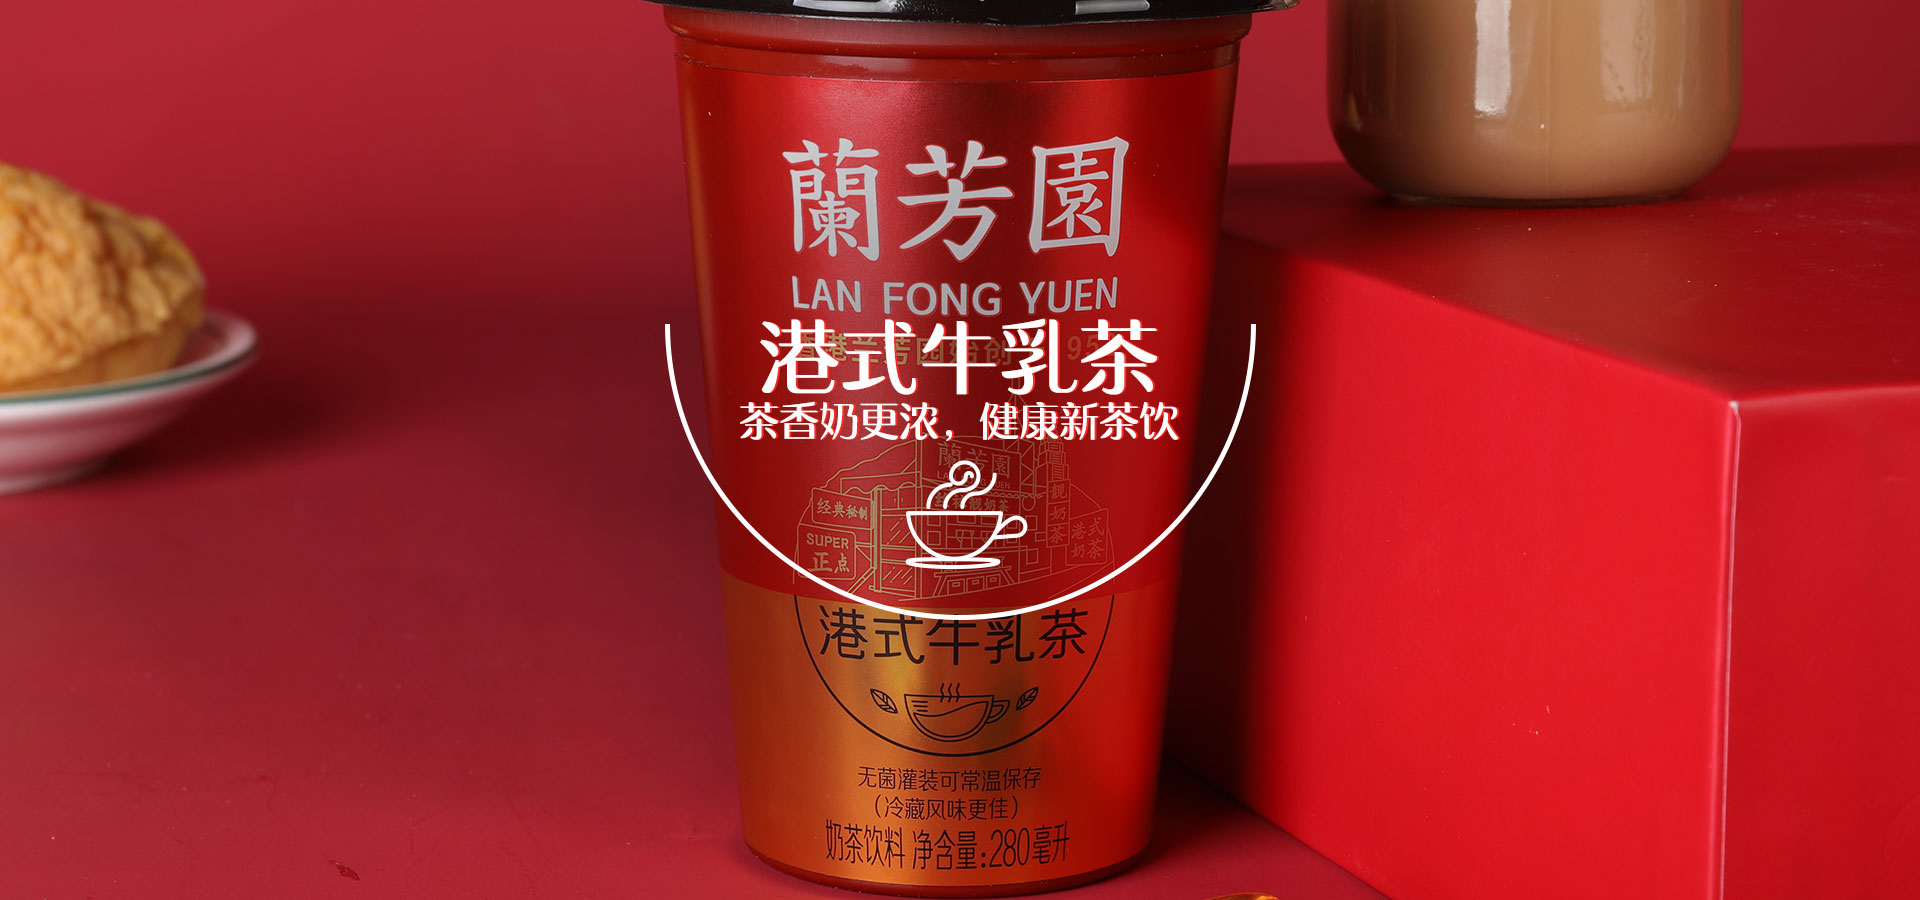 Hong Kong style</br>Milk Tea